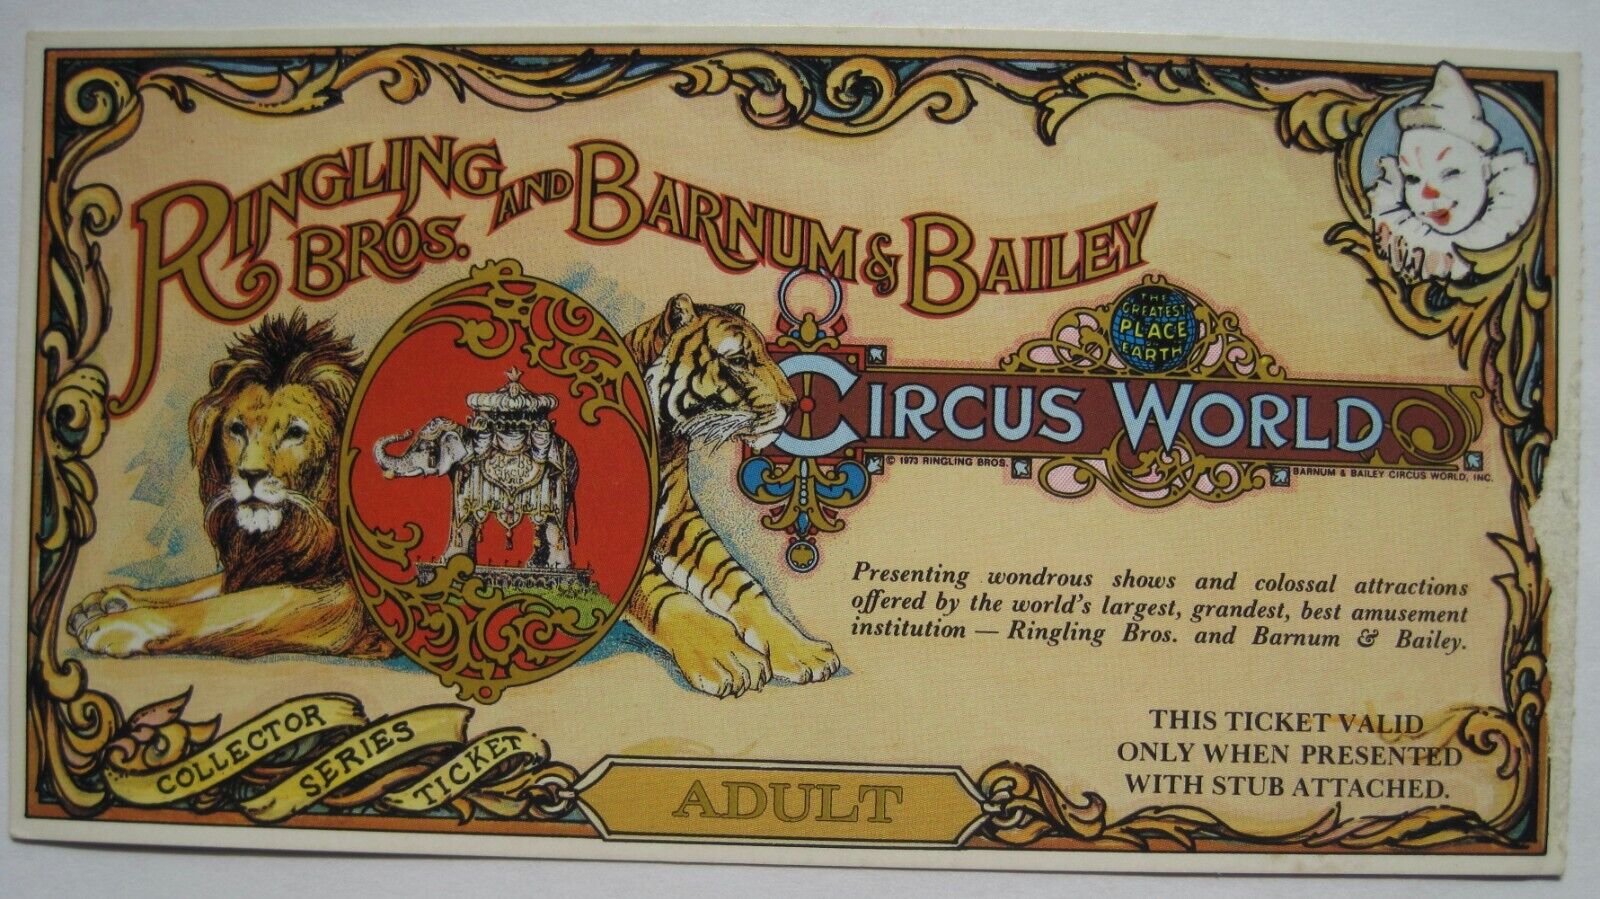 Ringling Bros., Barnum & Bailey Circus World Ticket; 1973 Collector Series